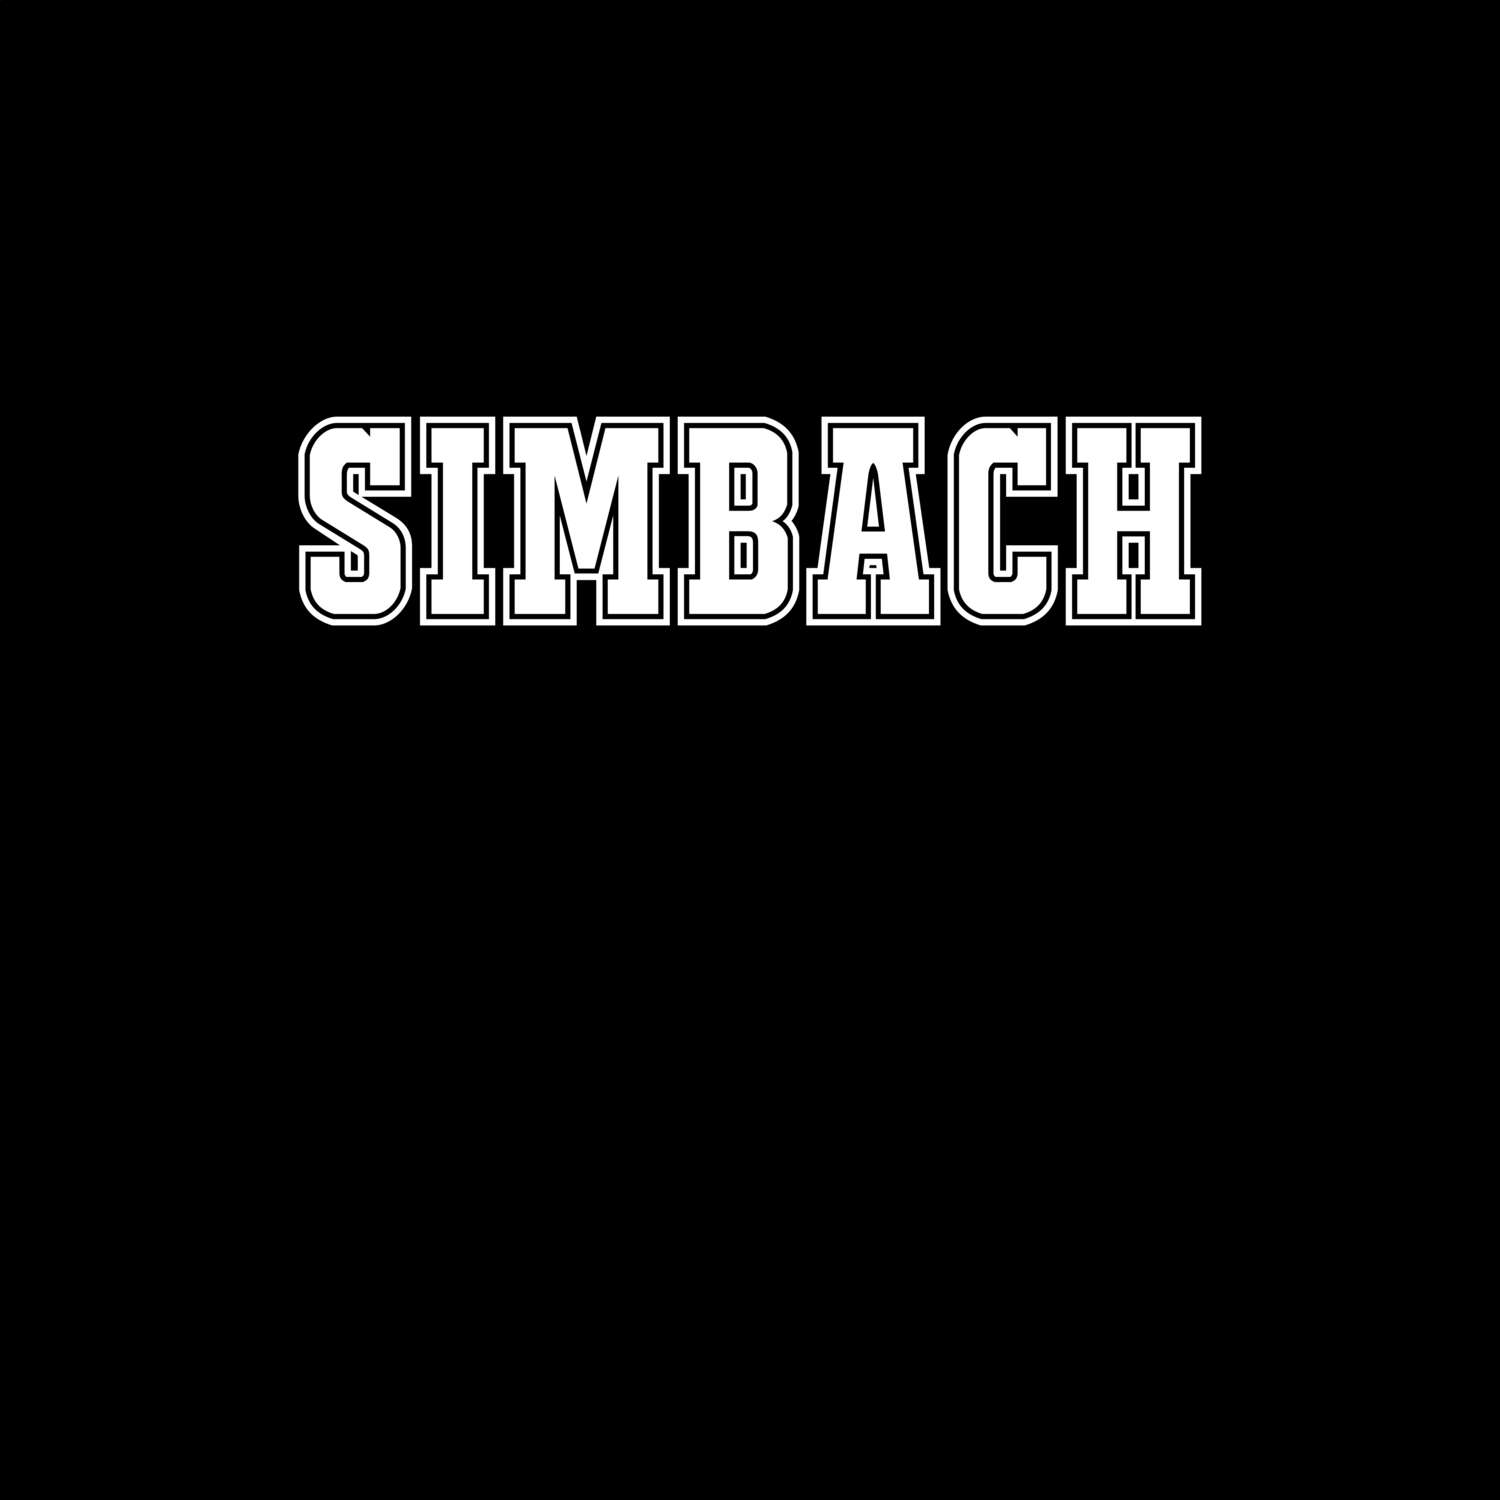 Simbach T-Shirt »Classic«